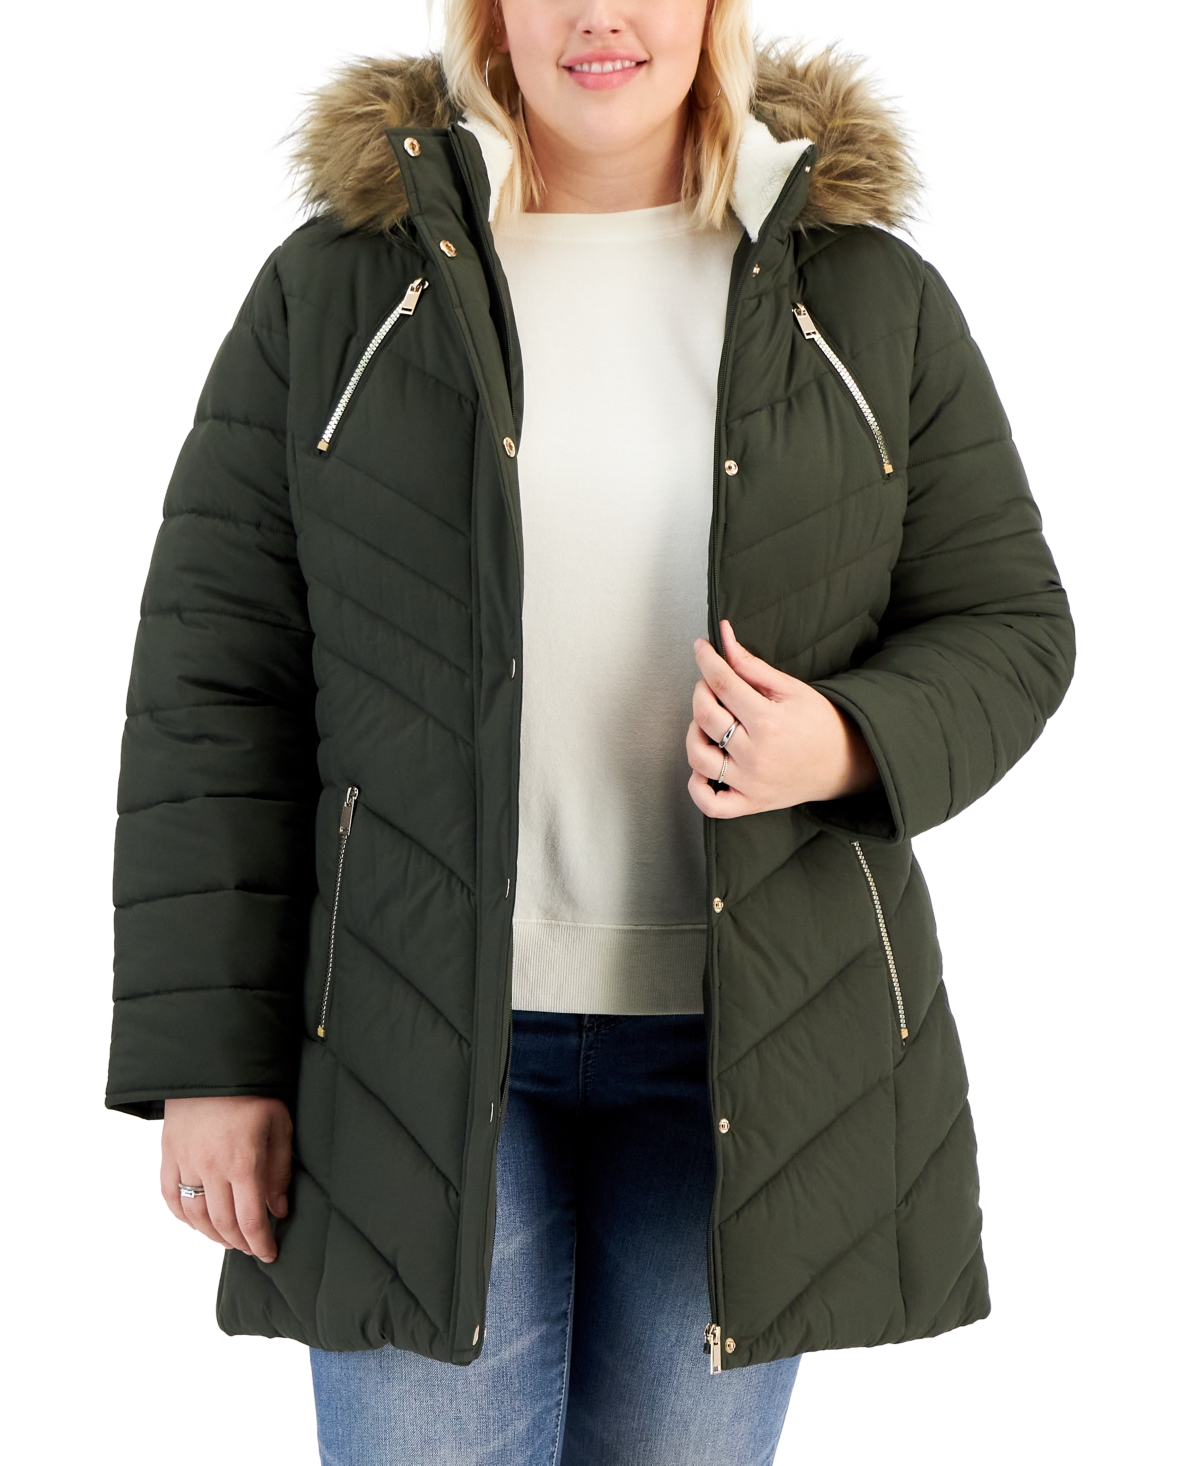 Maralyn & Me Juniors' Trendy Plus Size Faux-Fur-Trim Hooded Puffer Coat, Created for Macy's